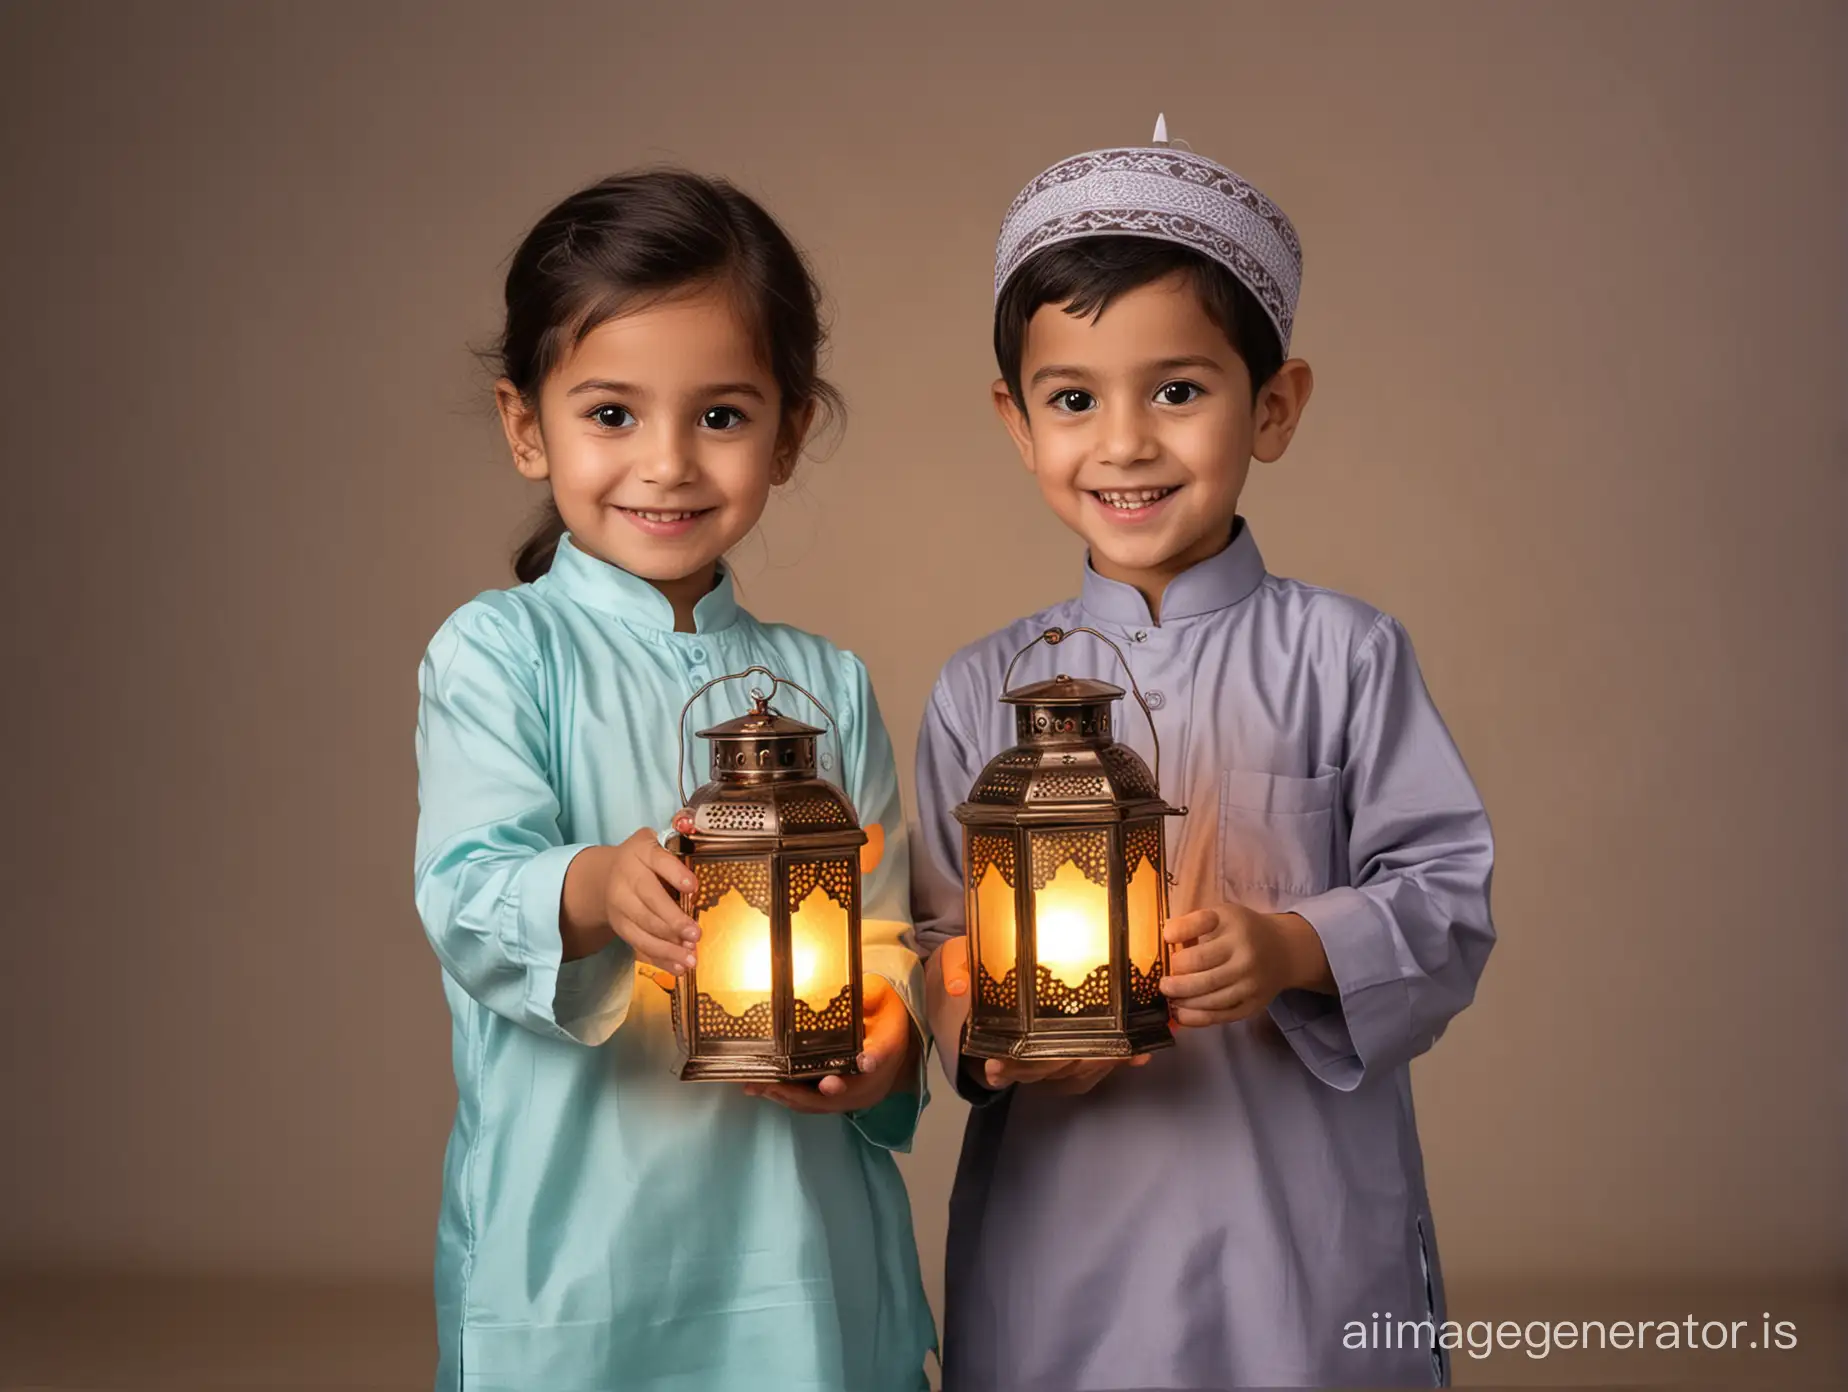 Youthful-Duo-Embracing-Ramadan-Spirit-with-Classic-Lantern